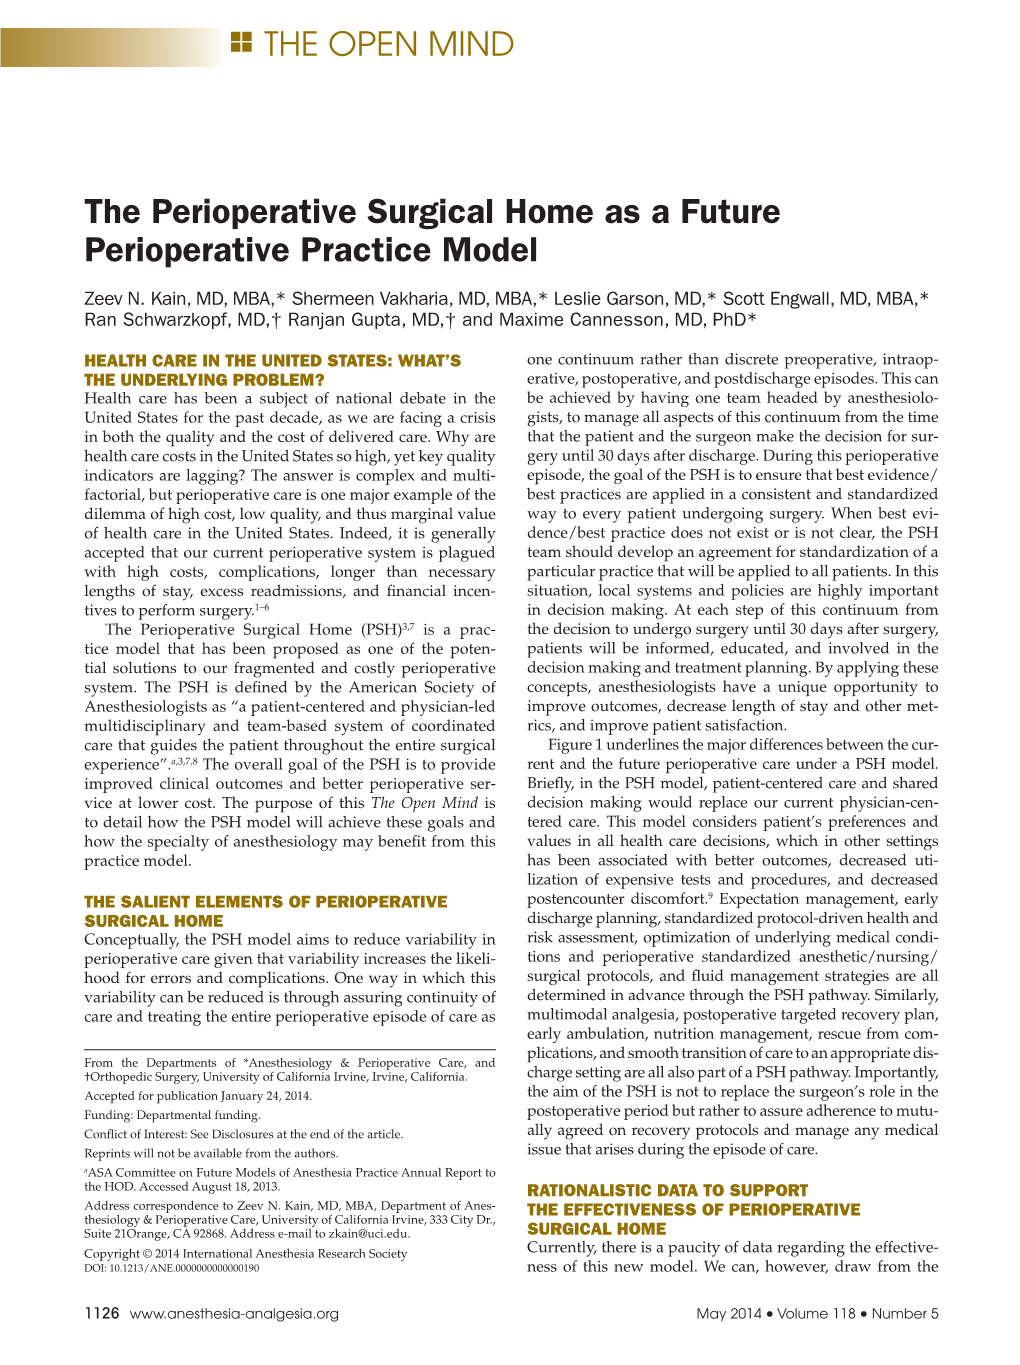 The Perioperative Surgical Home As a Future Perioperative Practice Model